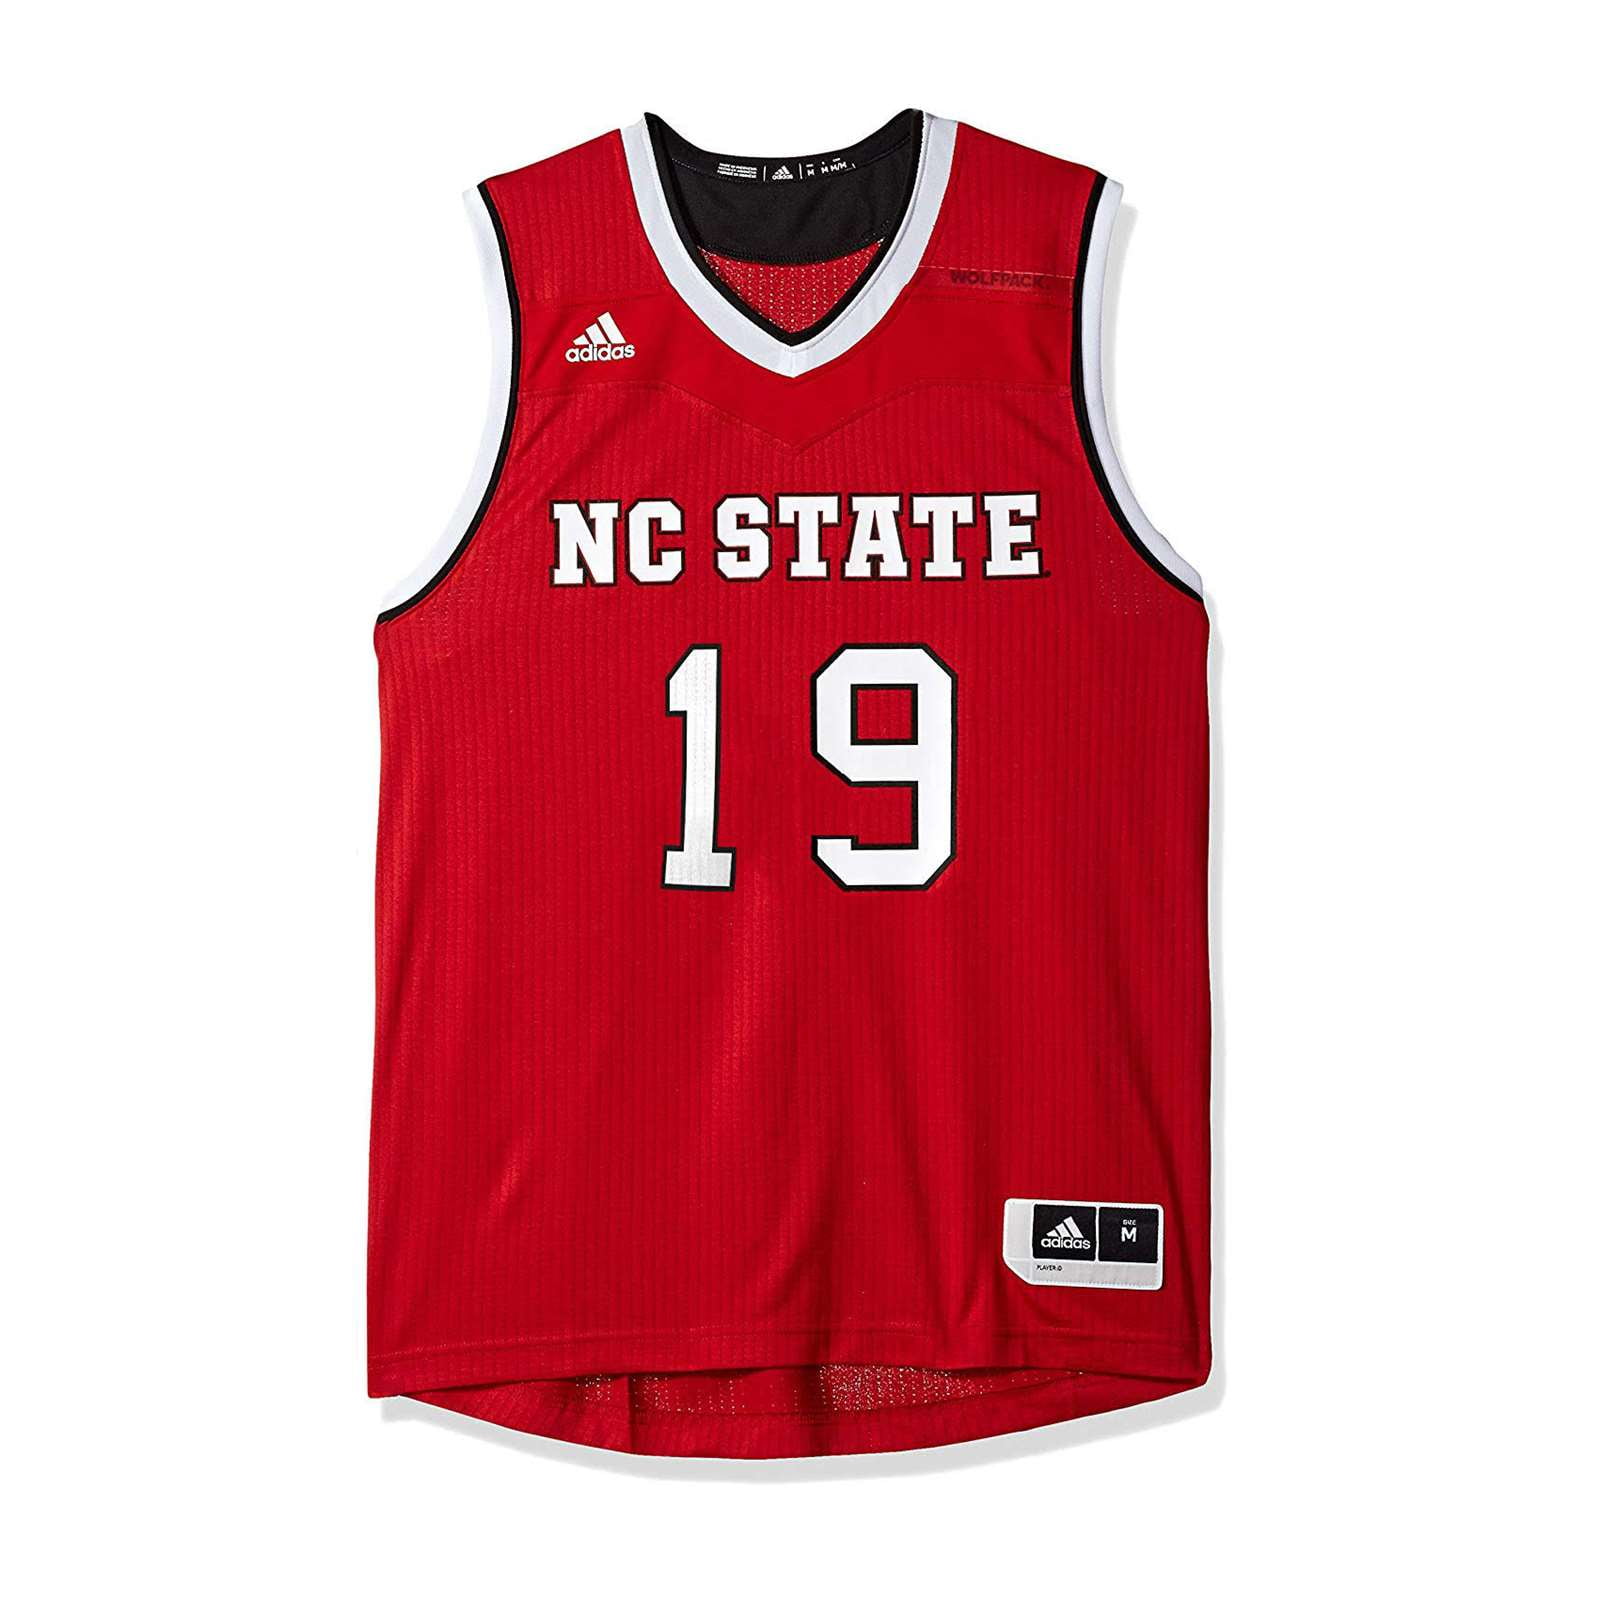 Adidas Men Ncaa North Carolina Replica Basketball Jersey - Walmart.com